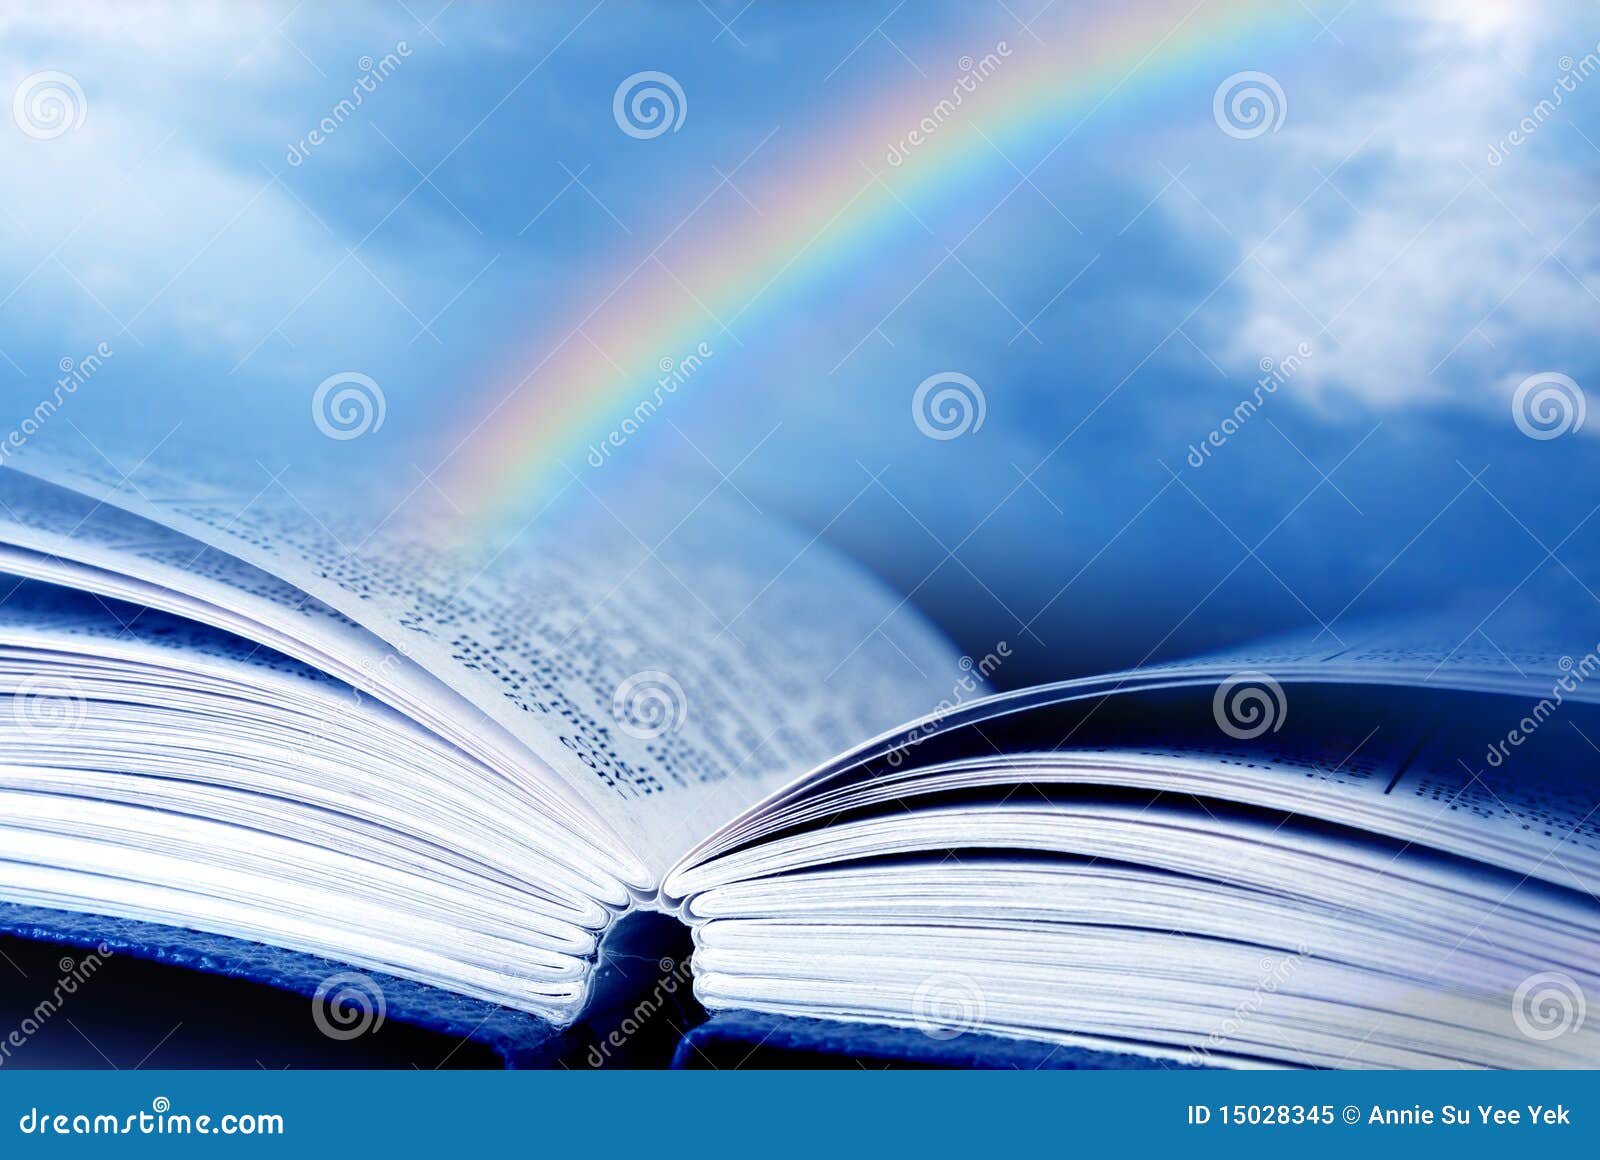 bible with rainbow